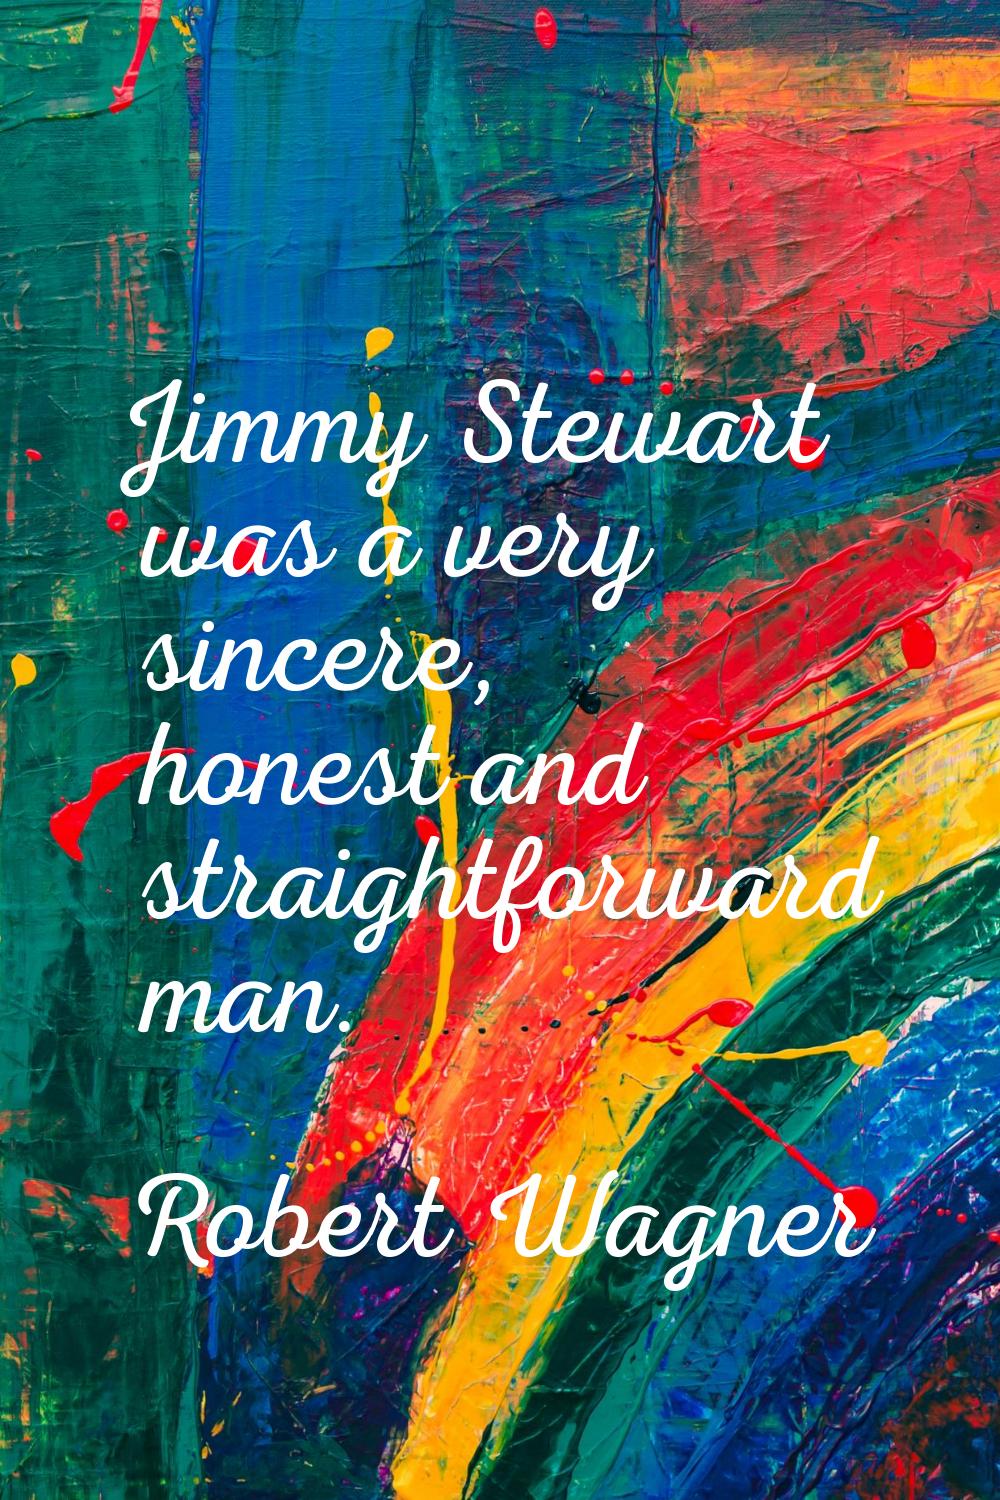 Jimmy Stewart was a very sincere, honest and straightforward man.